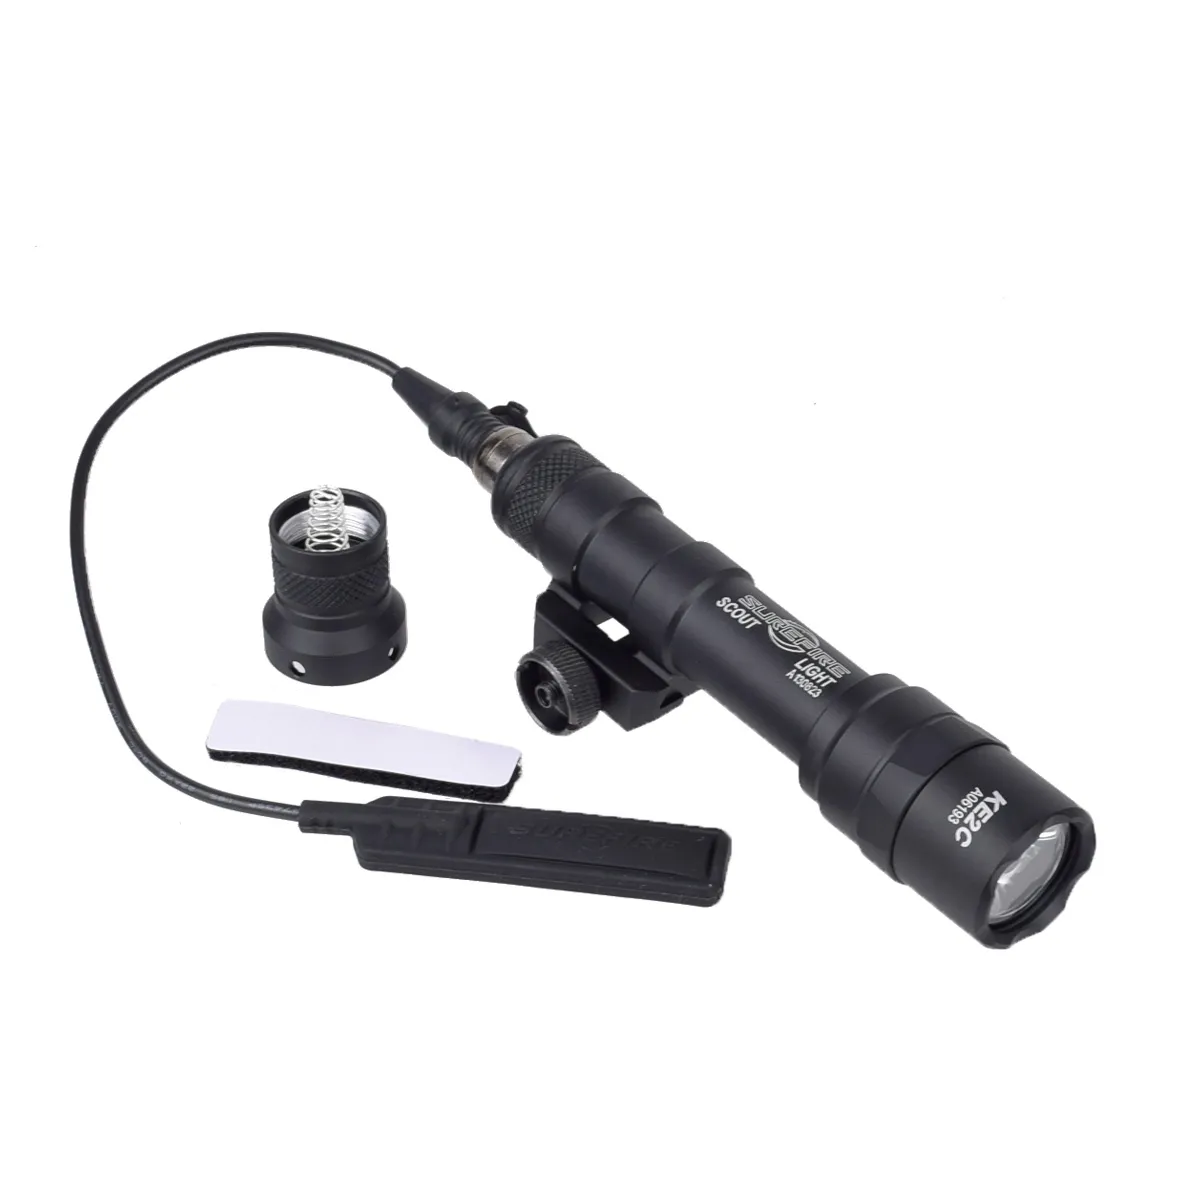 Tactical Surefir M600 M600B Gun Scout Light Lanterna Flashlight Torch for Pictinny Rail Constant/Momentary output